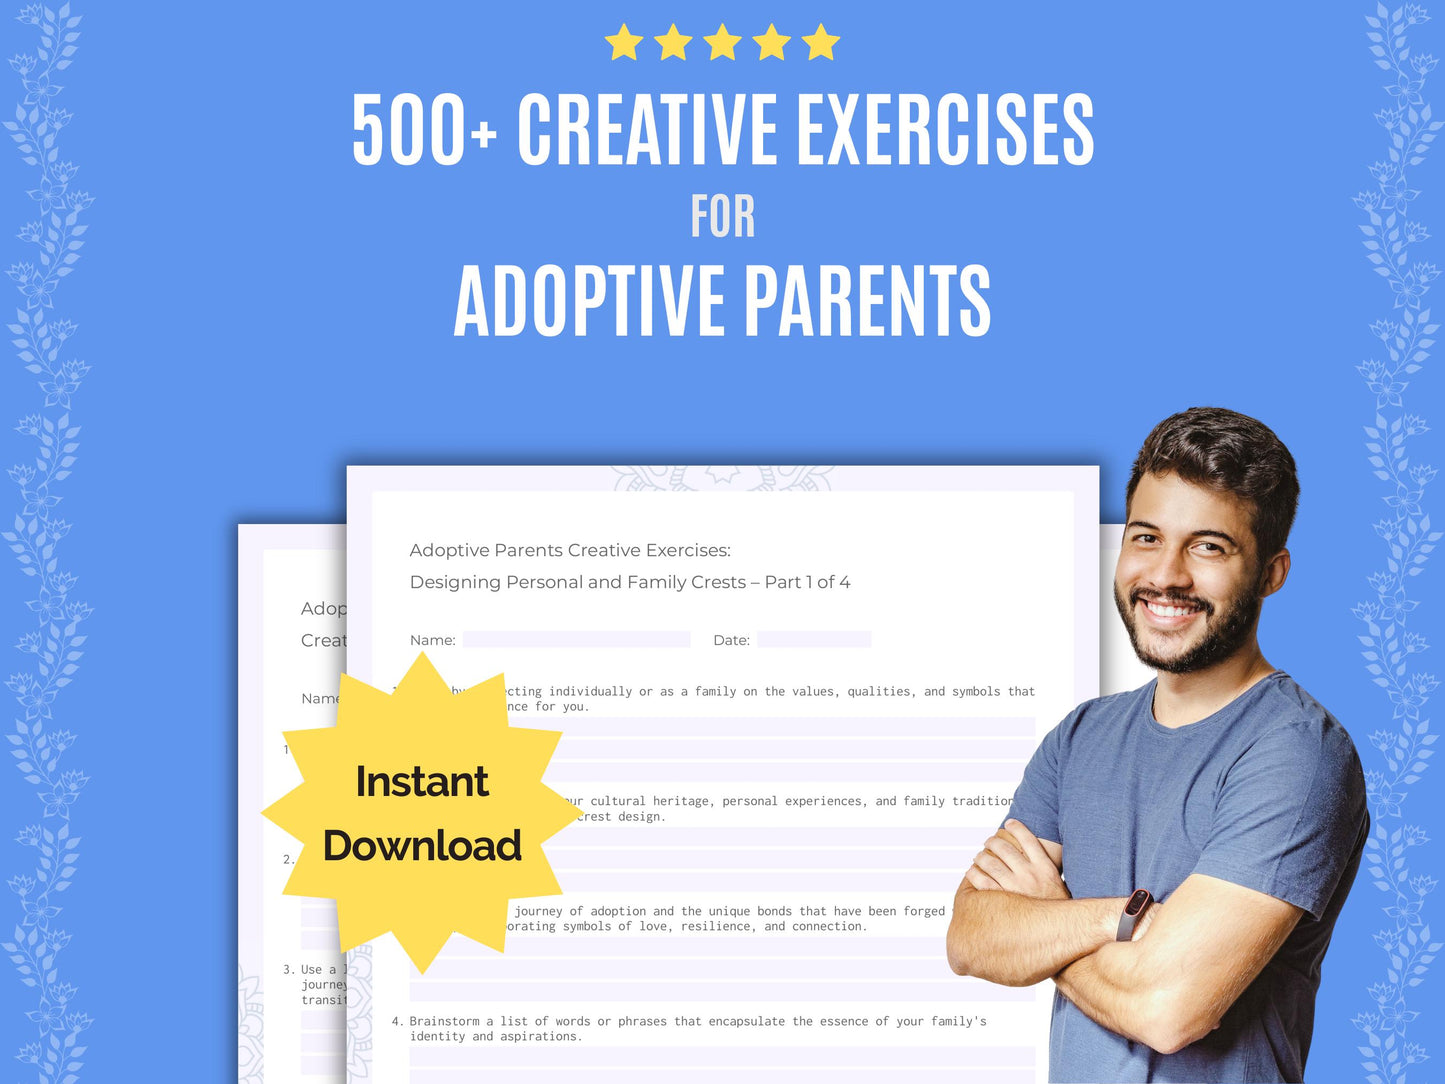 Adoptive Parents Creative Exercises